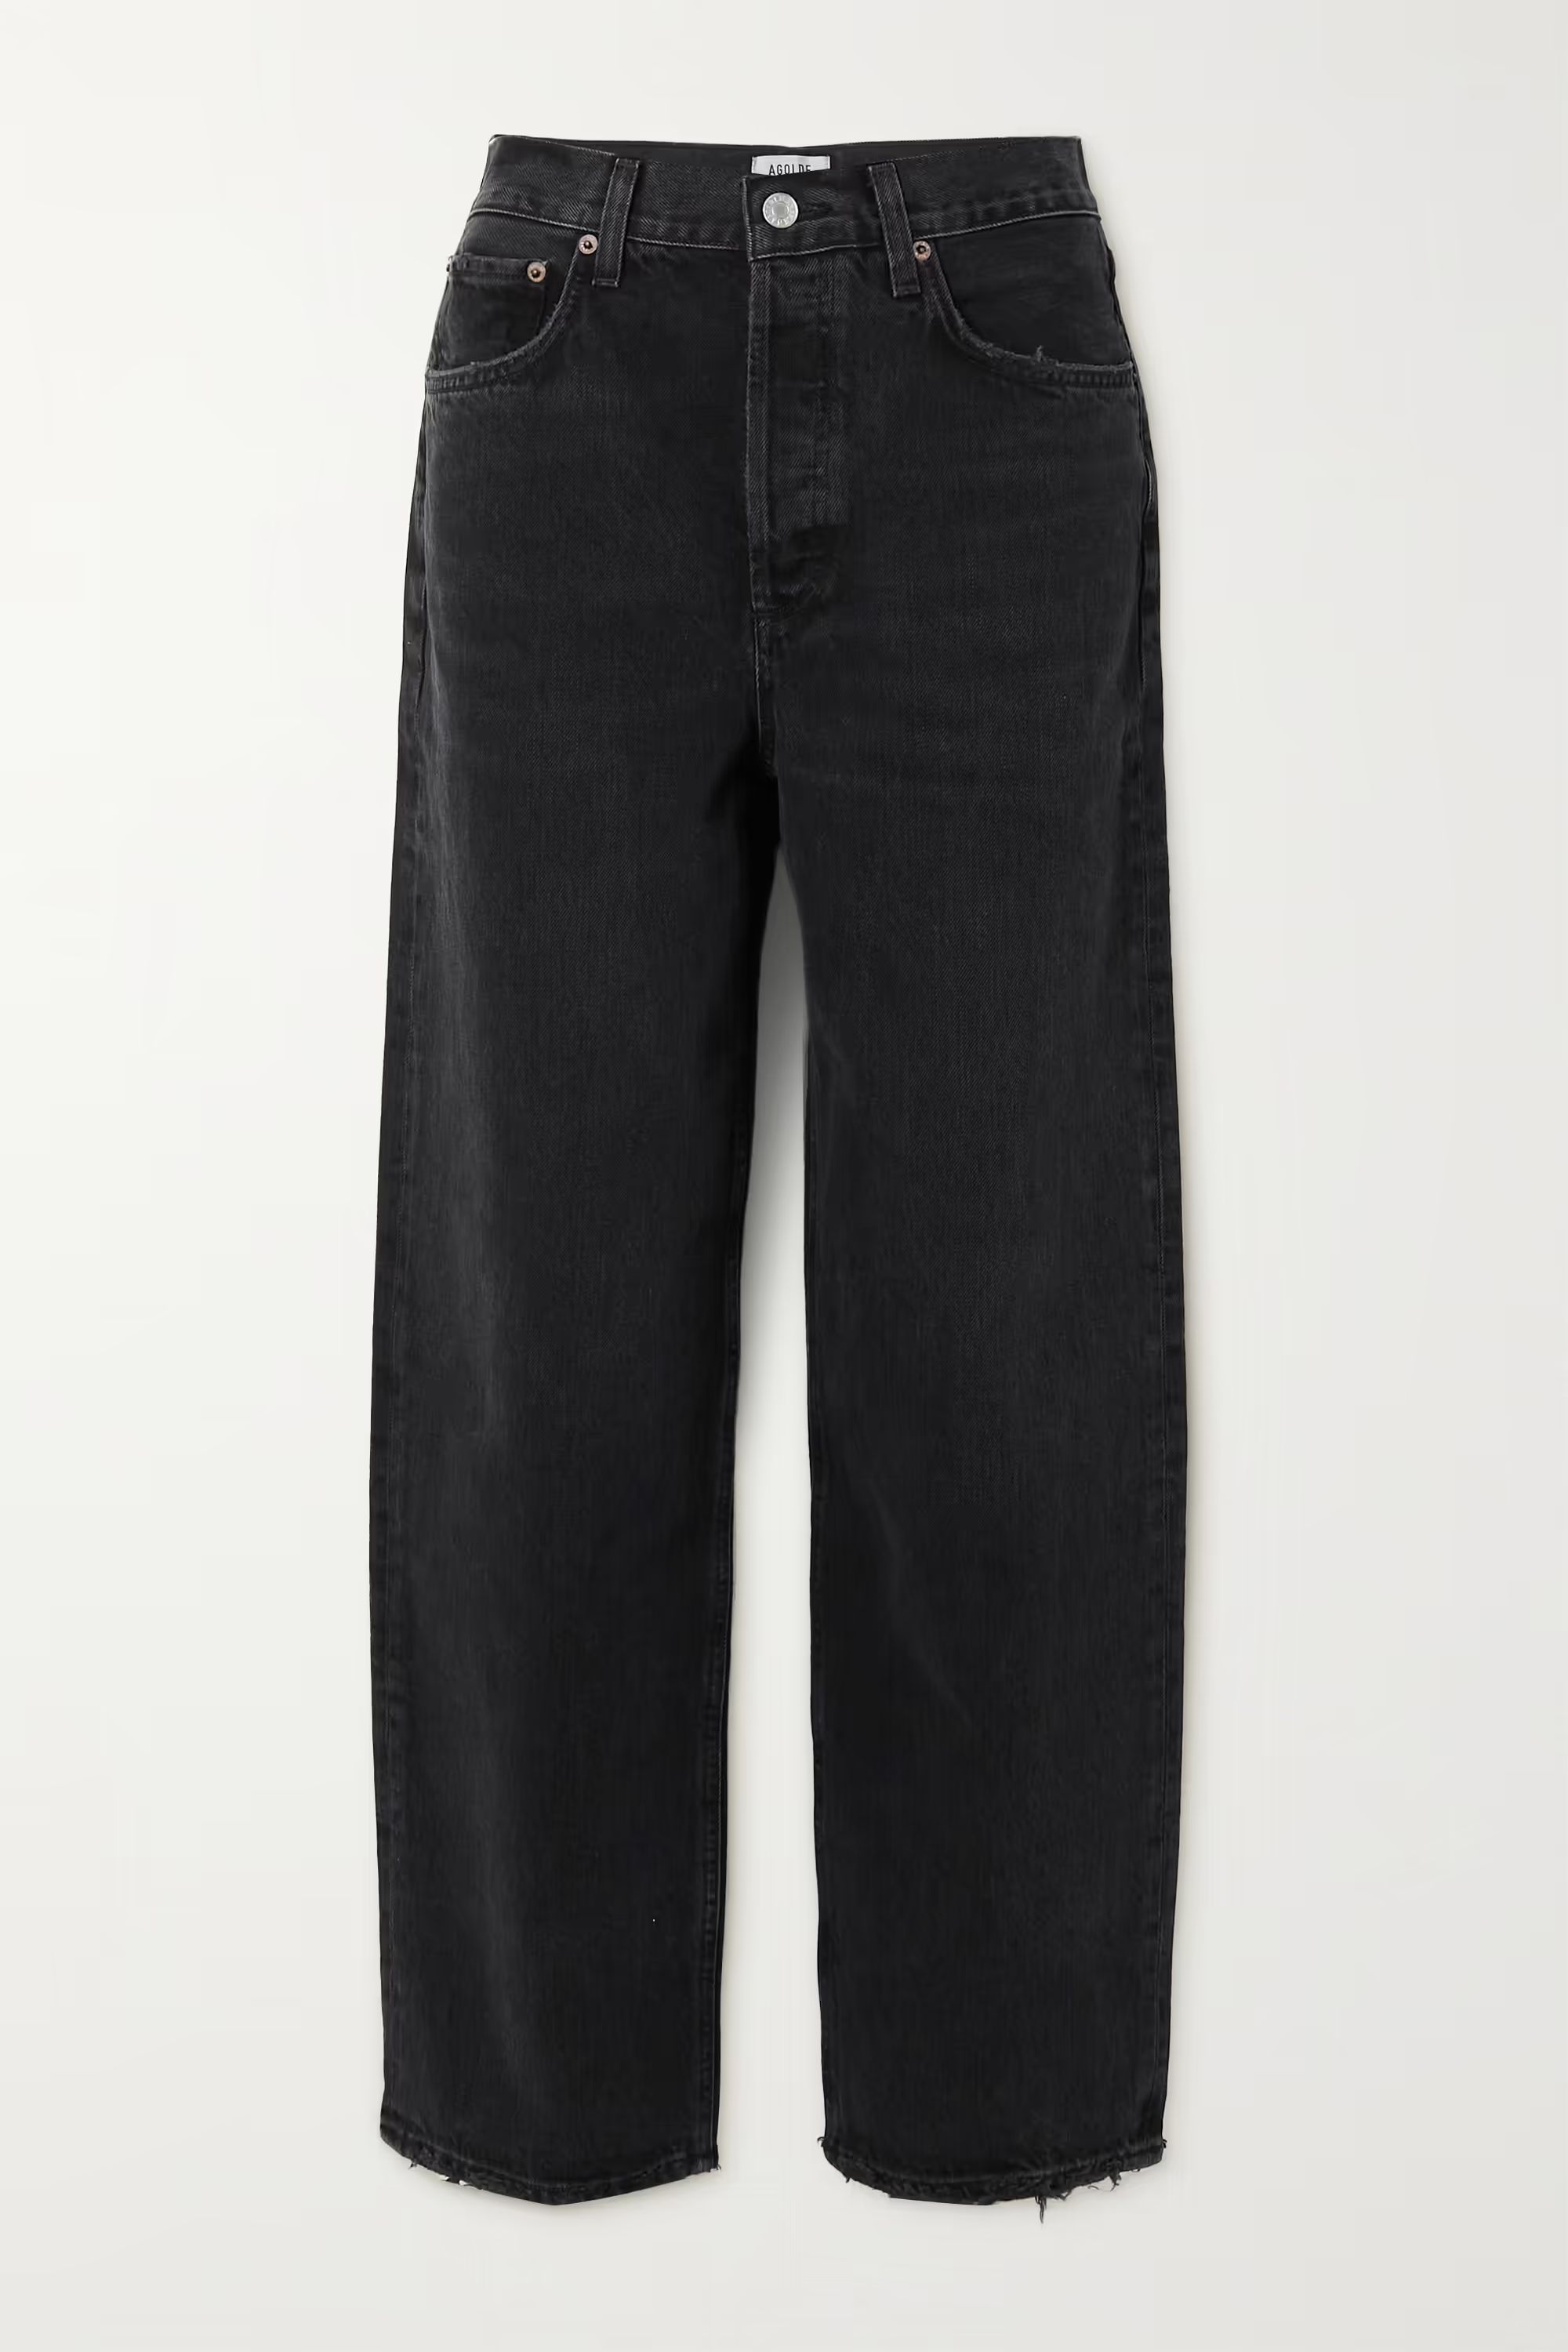 + NET SUSTAIN Dara Baggy mid-rise straight-leg organic jeans | NET-A-PORTER (US)